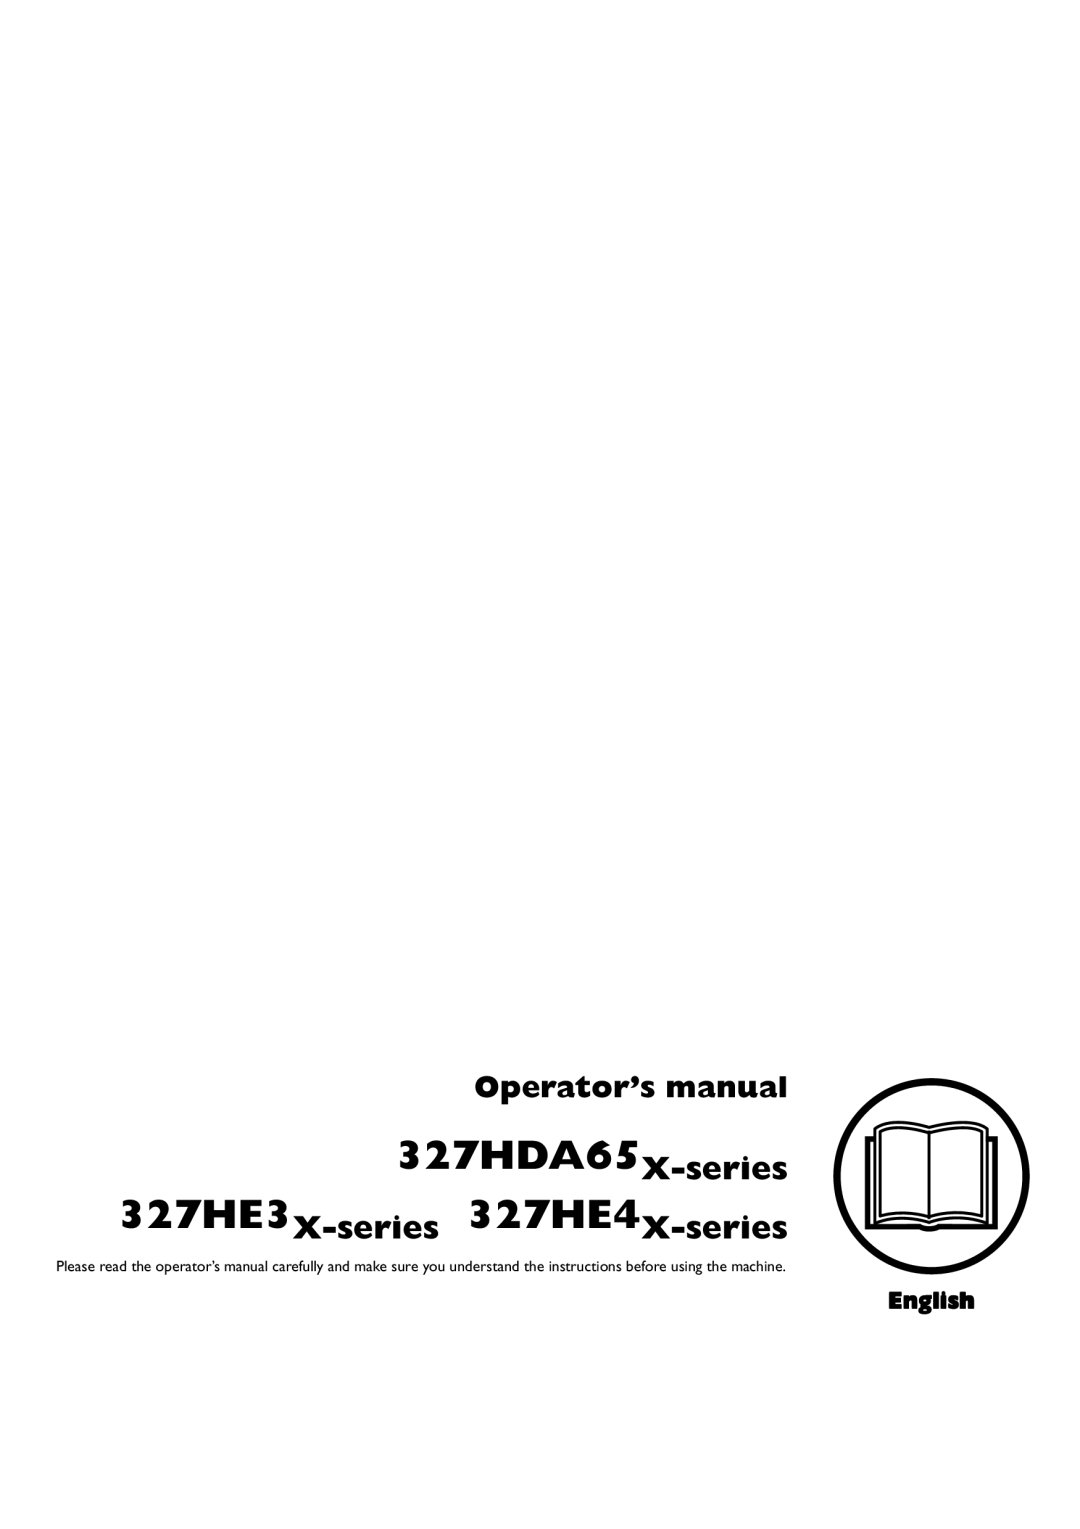 Husqvarna 327HE3 x-series manual Operator’s manual, 327HDA65X-series, 327HE3X-series 327HE4X-series, English 